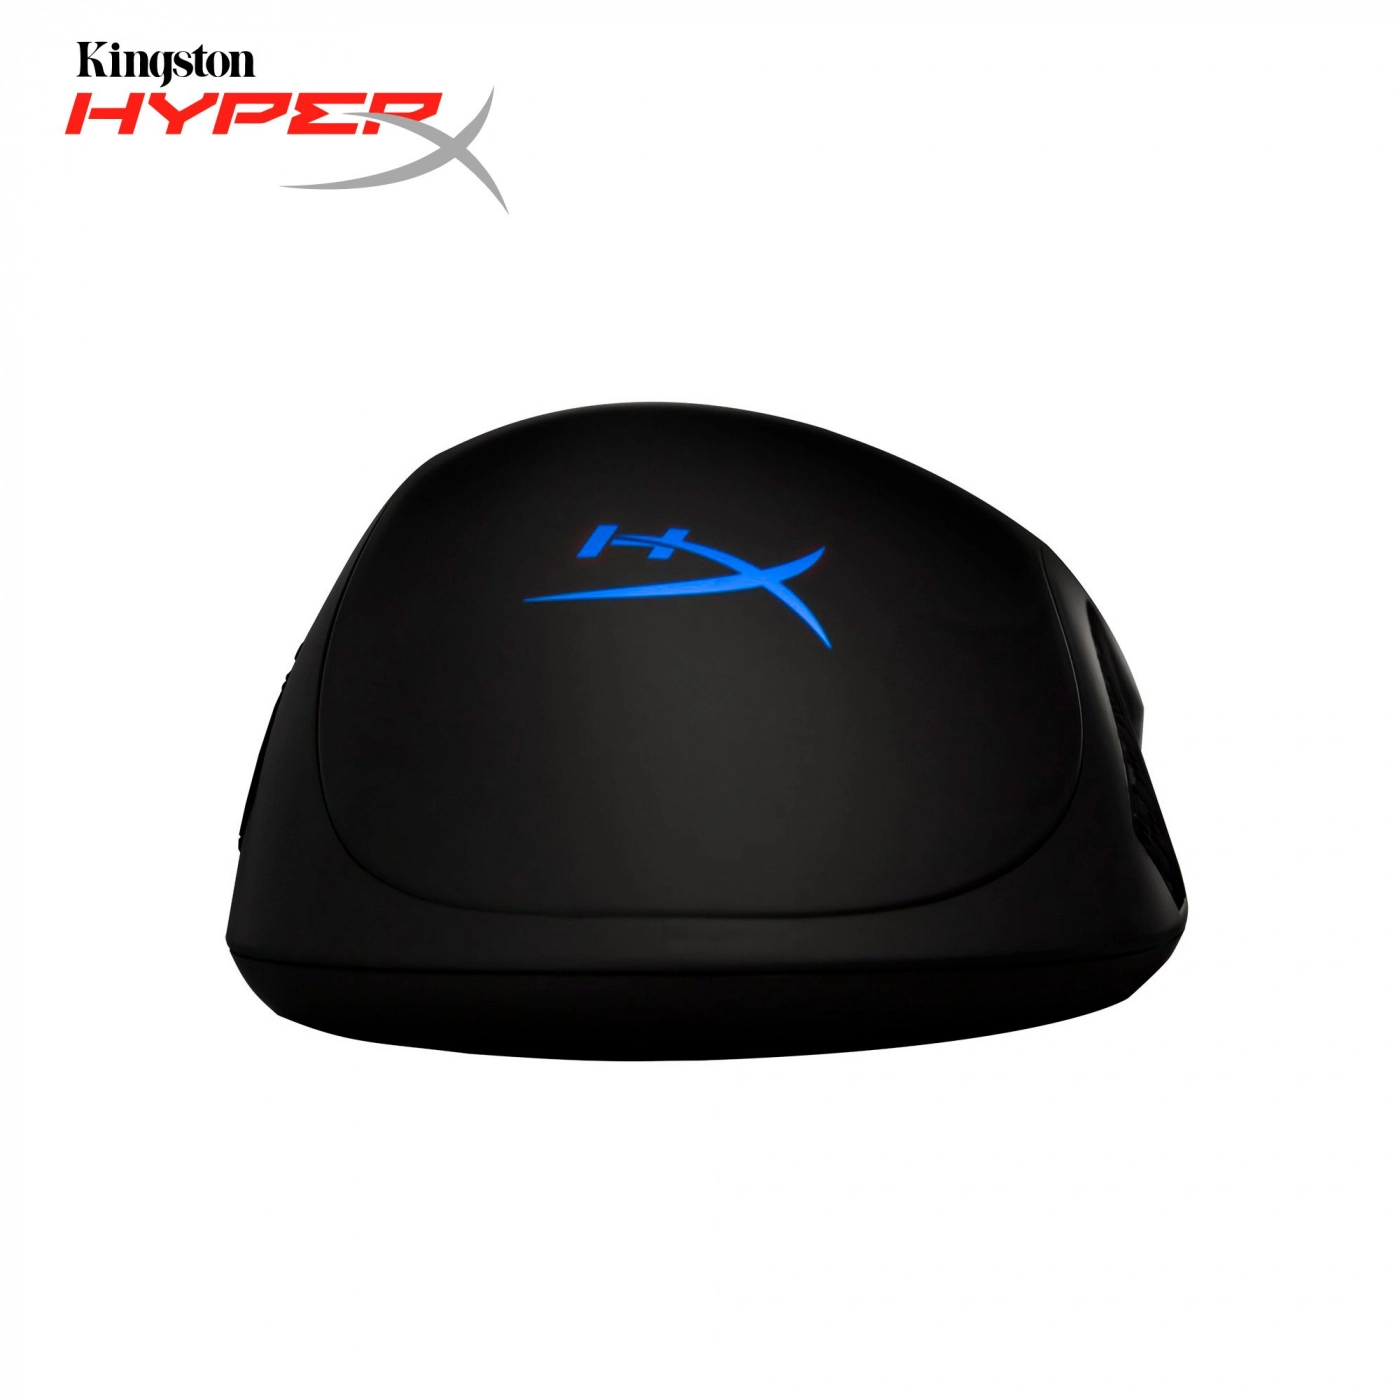 Купить Мышь Kingston HyperX Pulsefire FPS Pro RGB Gaming - фото 6